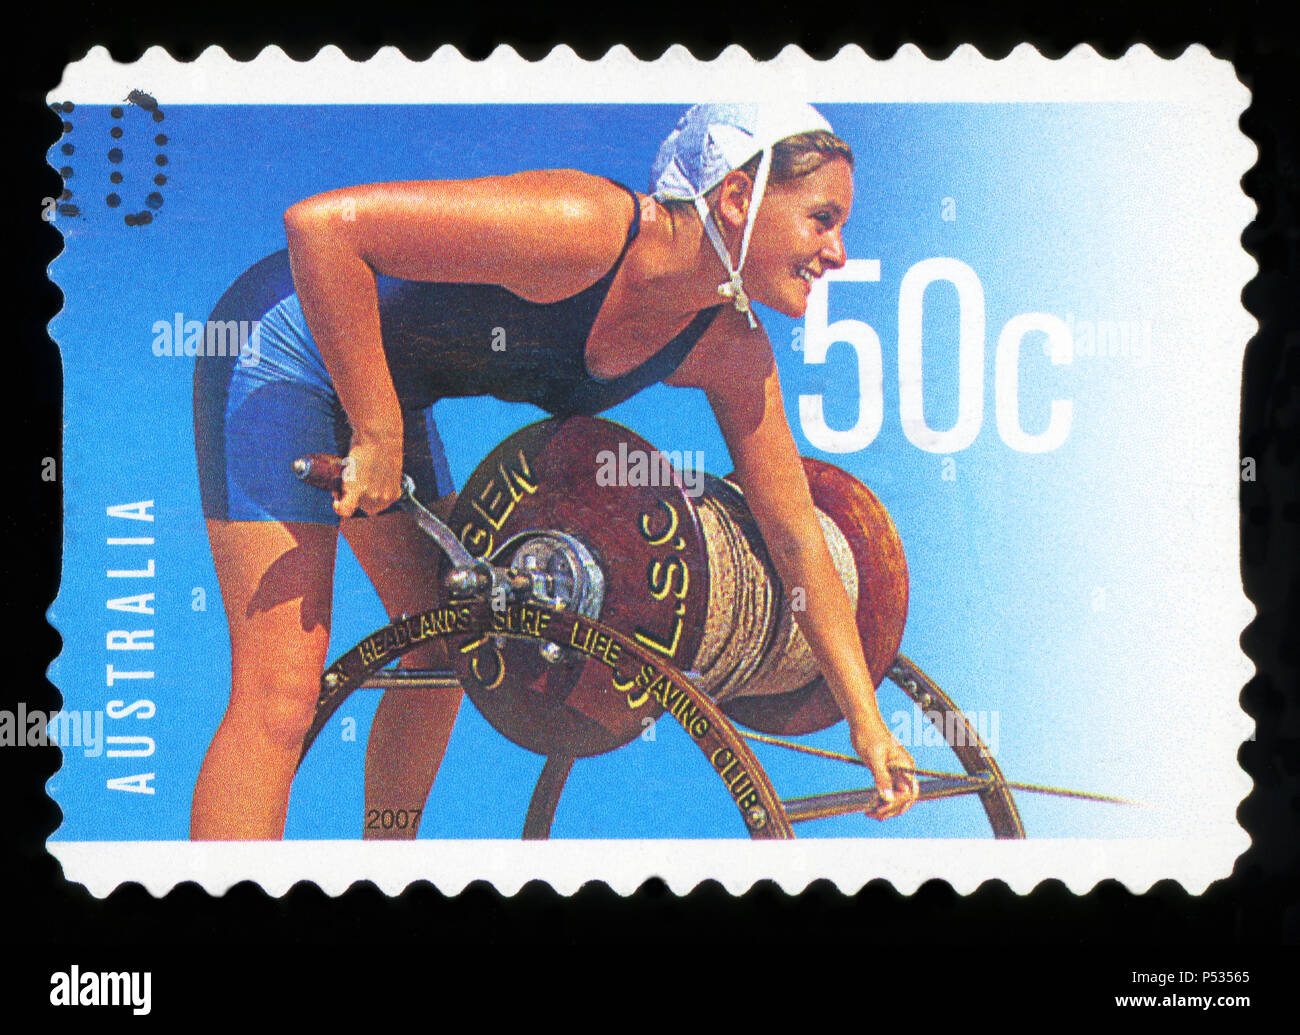 AUSTRALIA - CIRCA 2007: A stamp printed in Australia shows women winding rope and the inscription headlands surf life saving club, circa 2007 Stock Photo